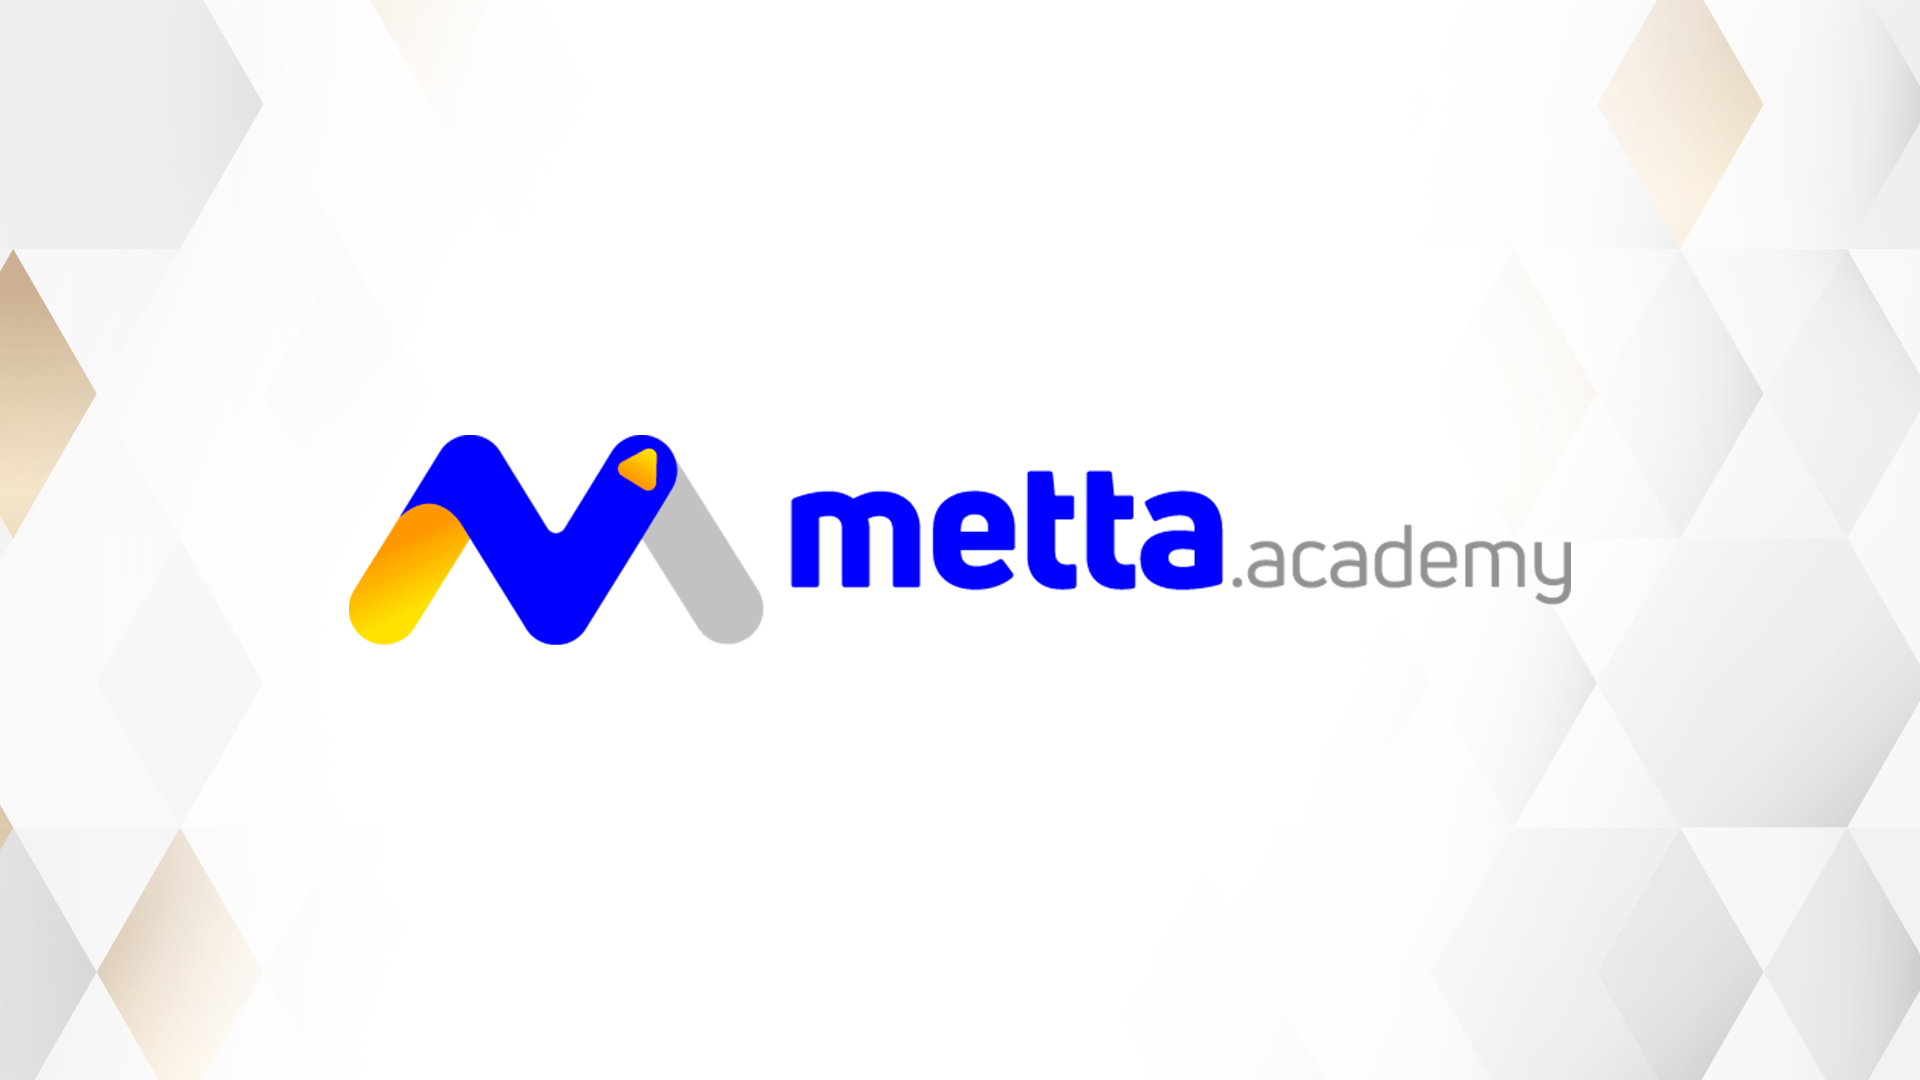 metta.academy